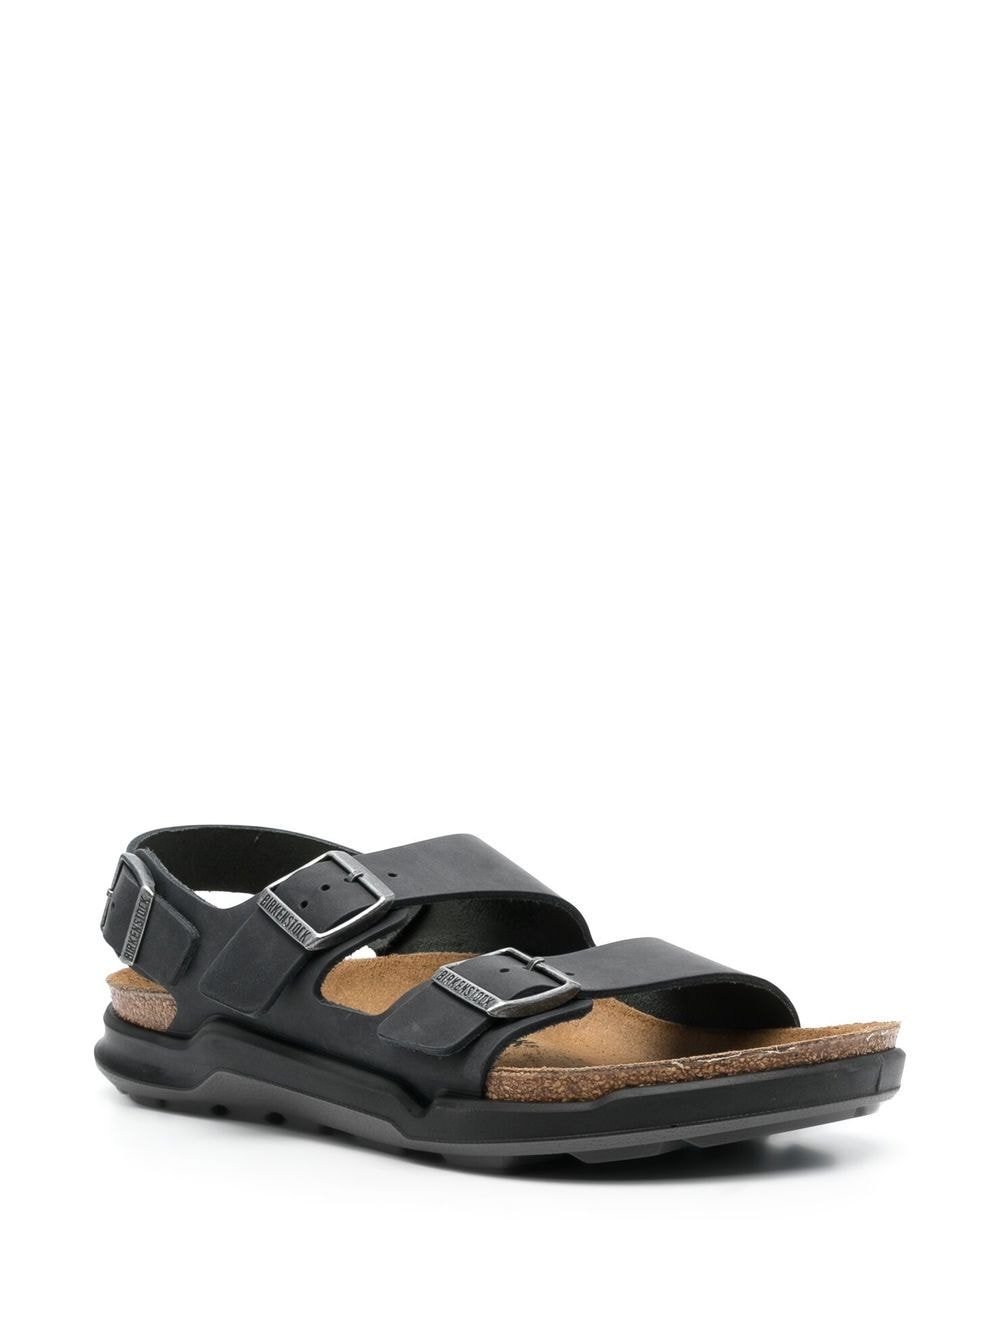 Shop Birkenstock Milano Leather Sandals In Black